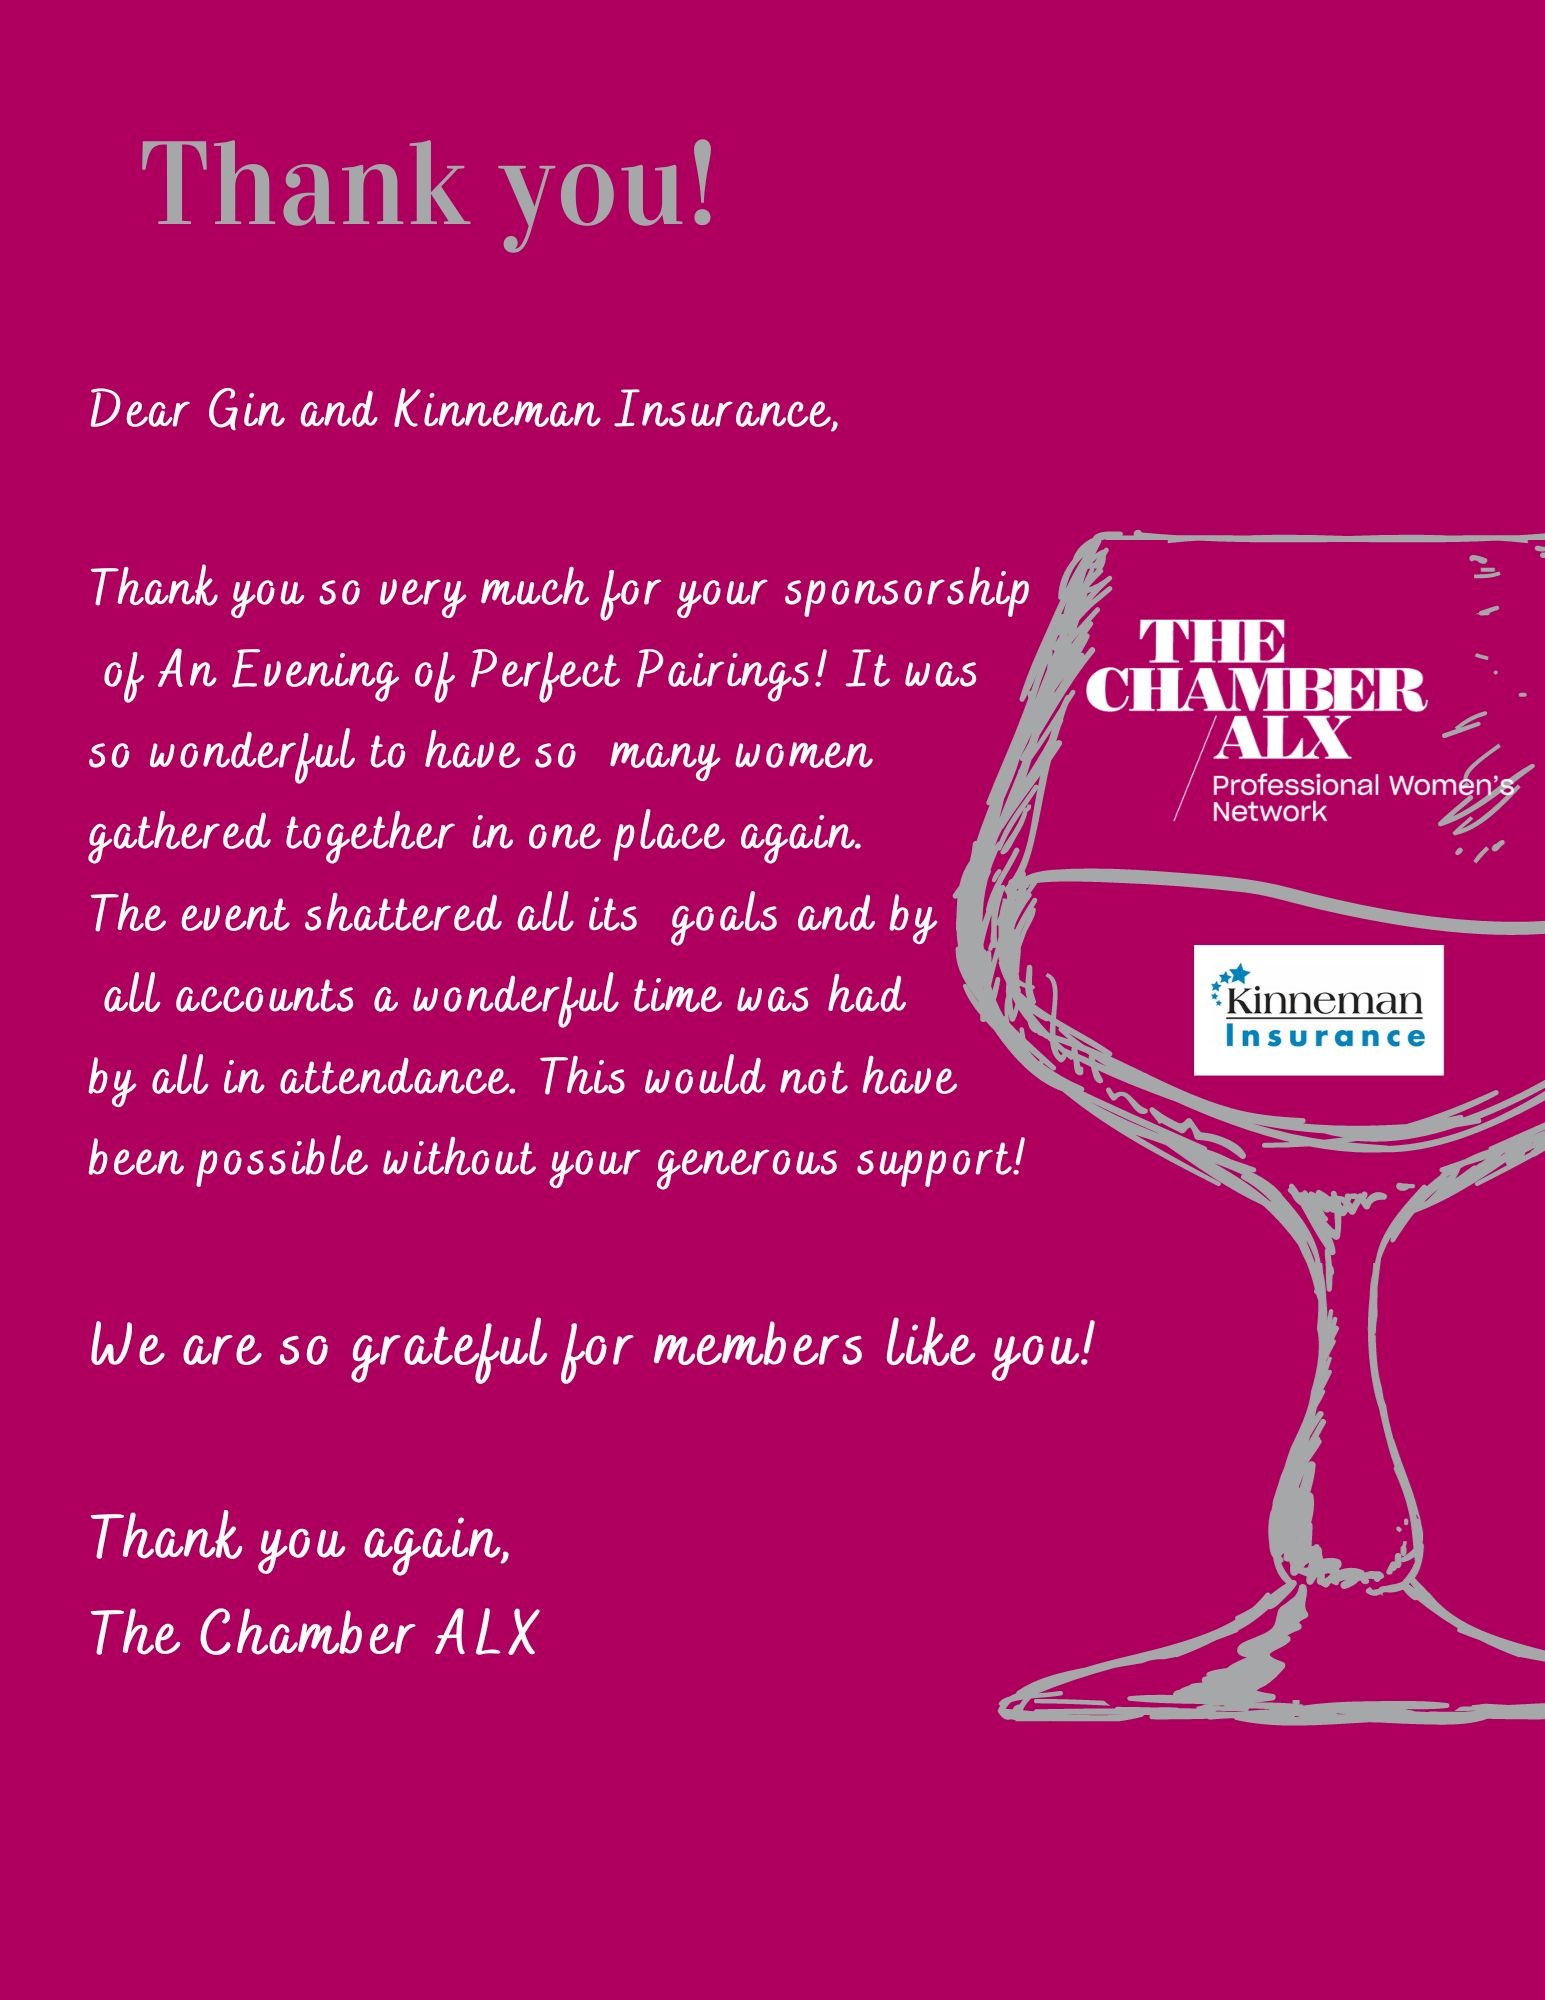 Kinneman thank you to the chamber ALX